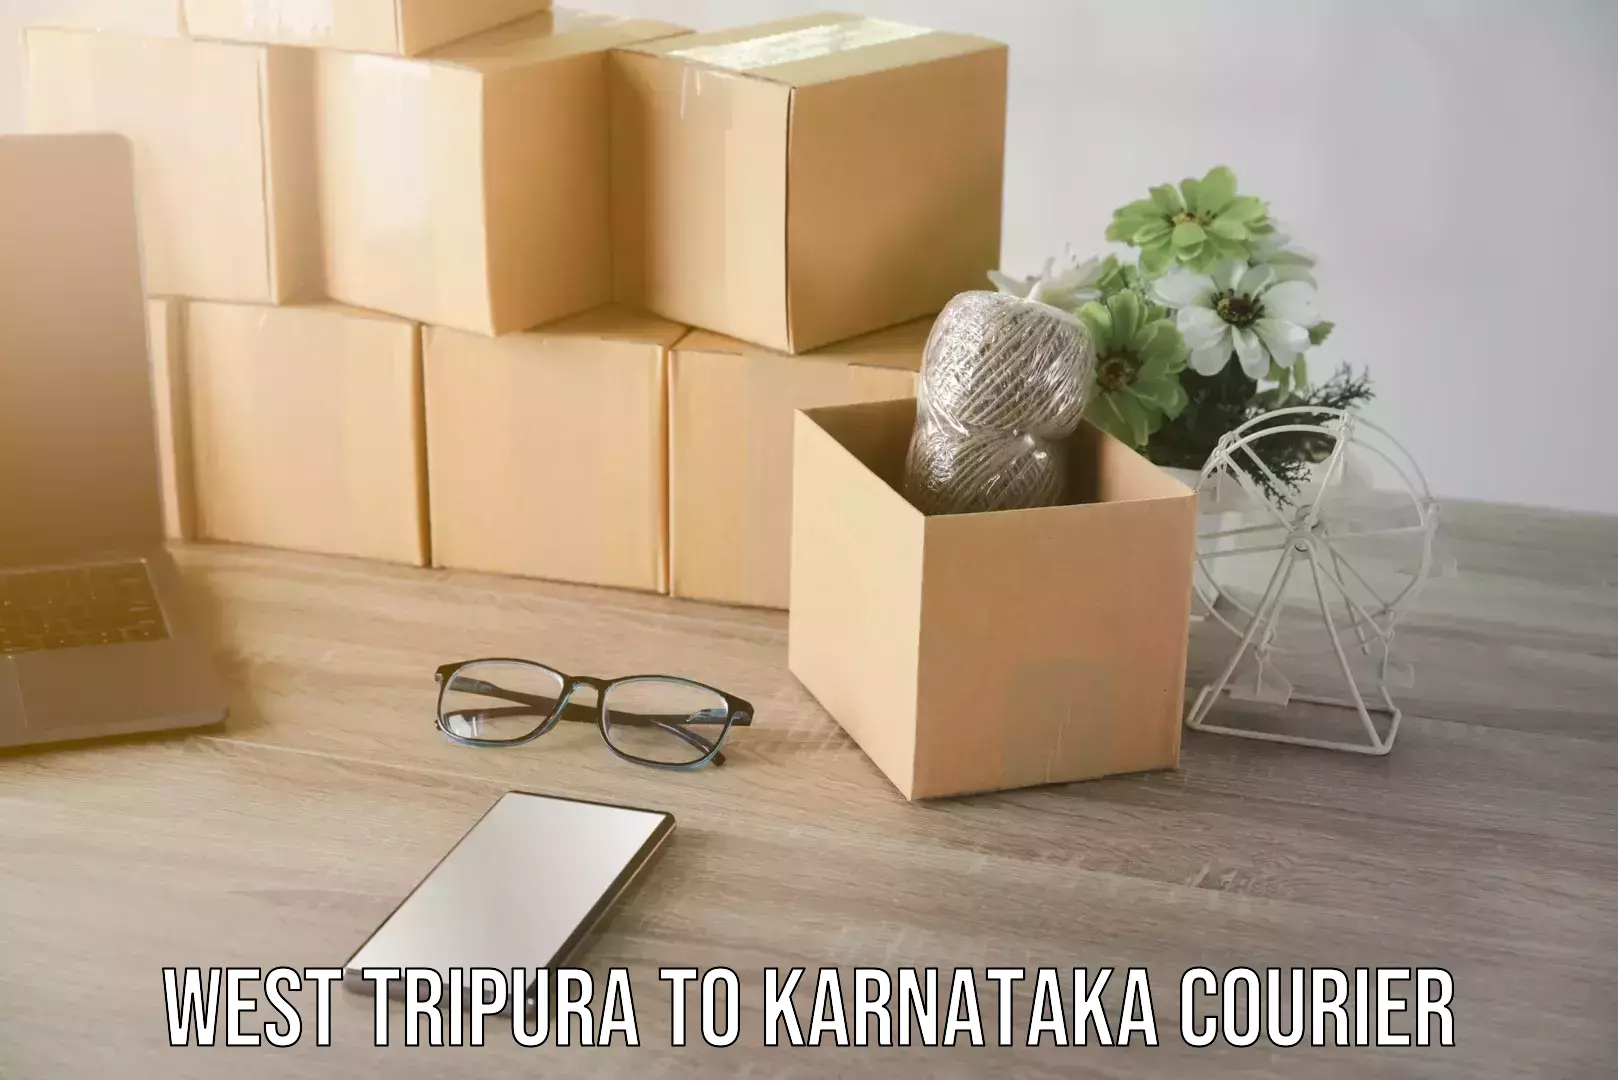 Express package handling in West Tripura to Karnataka